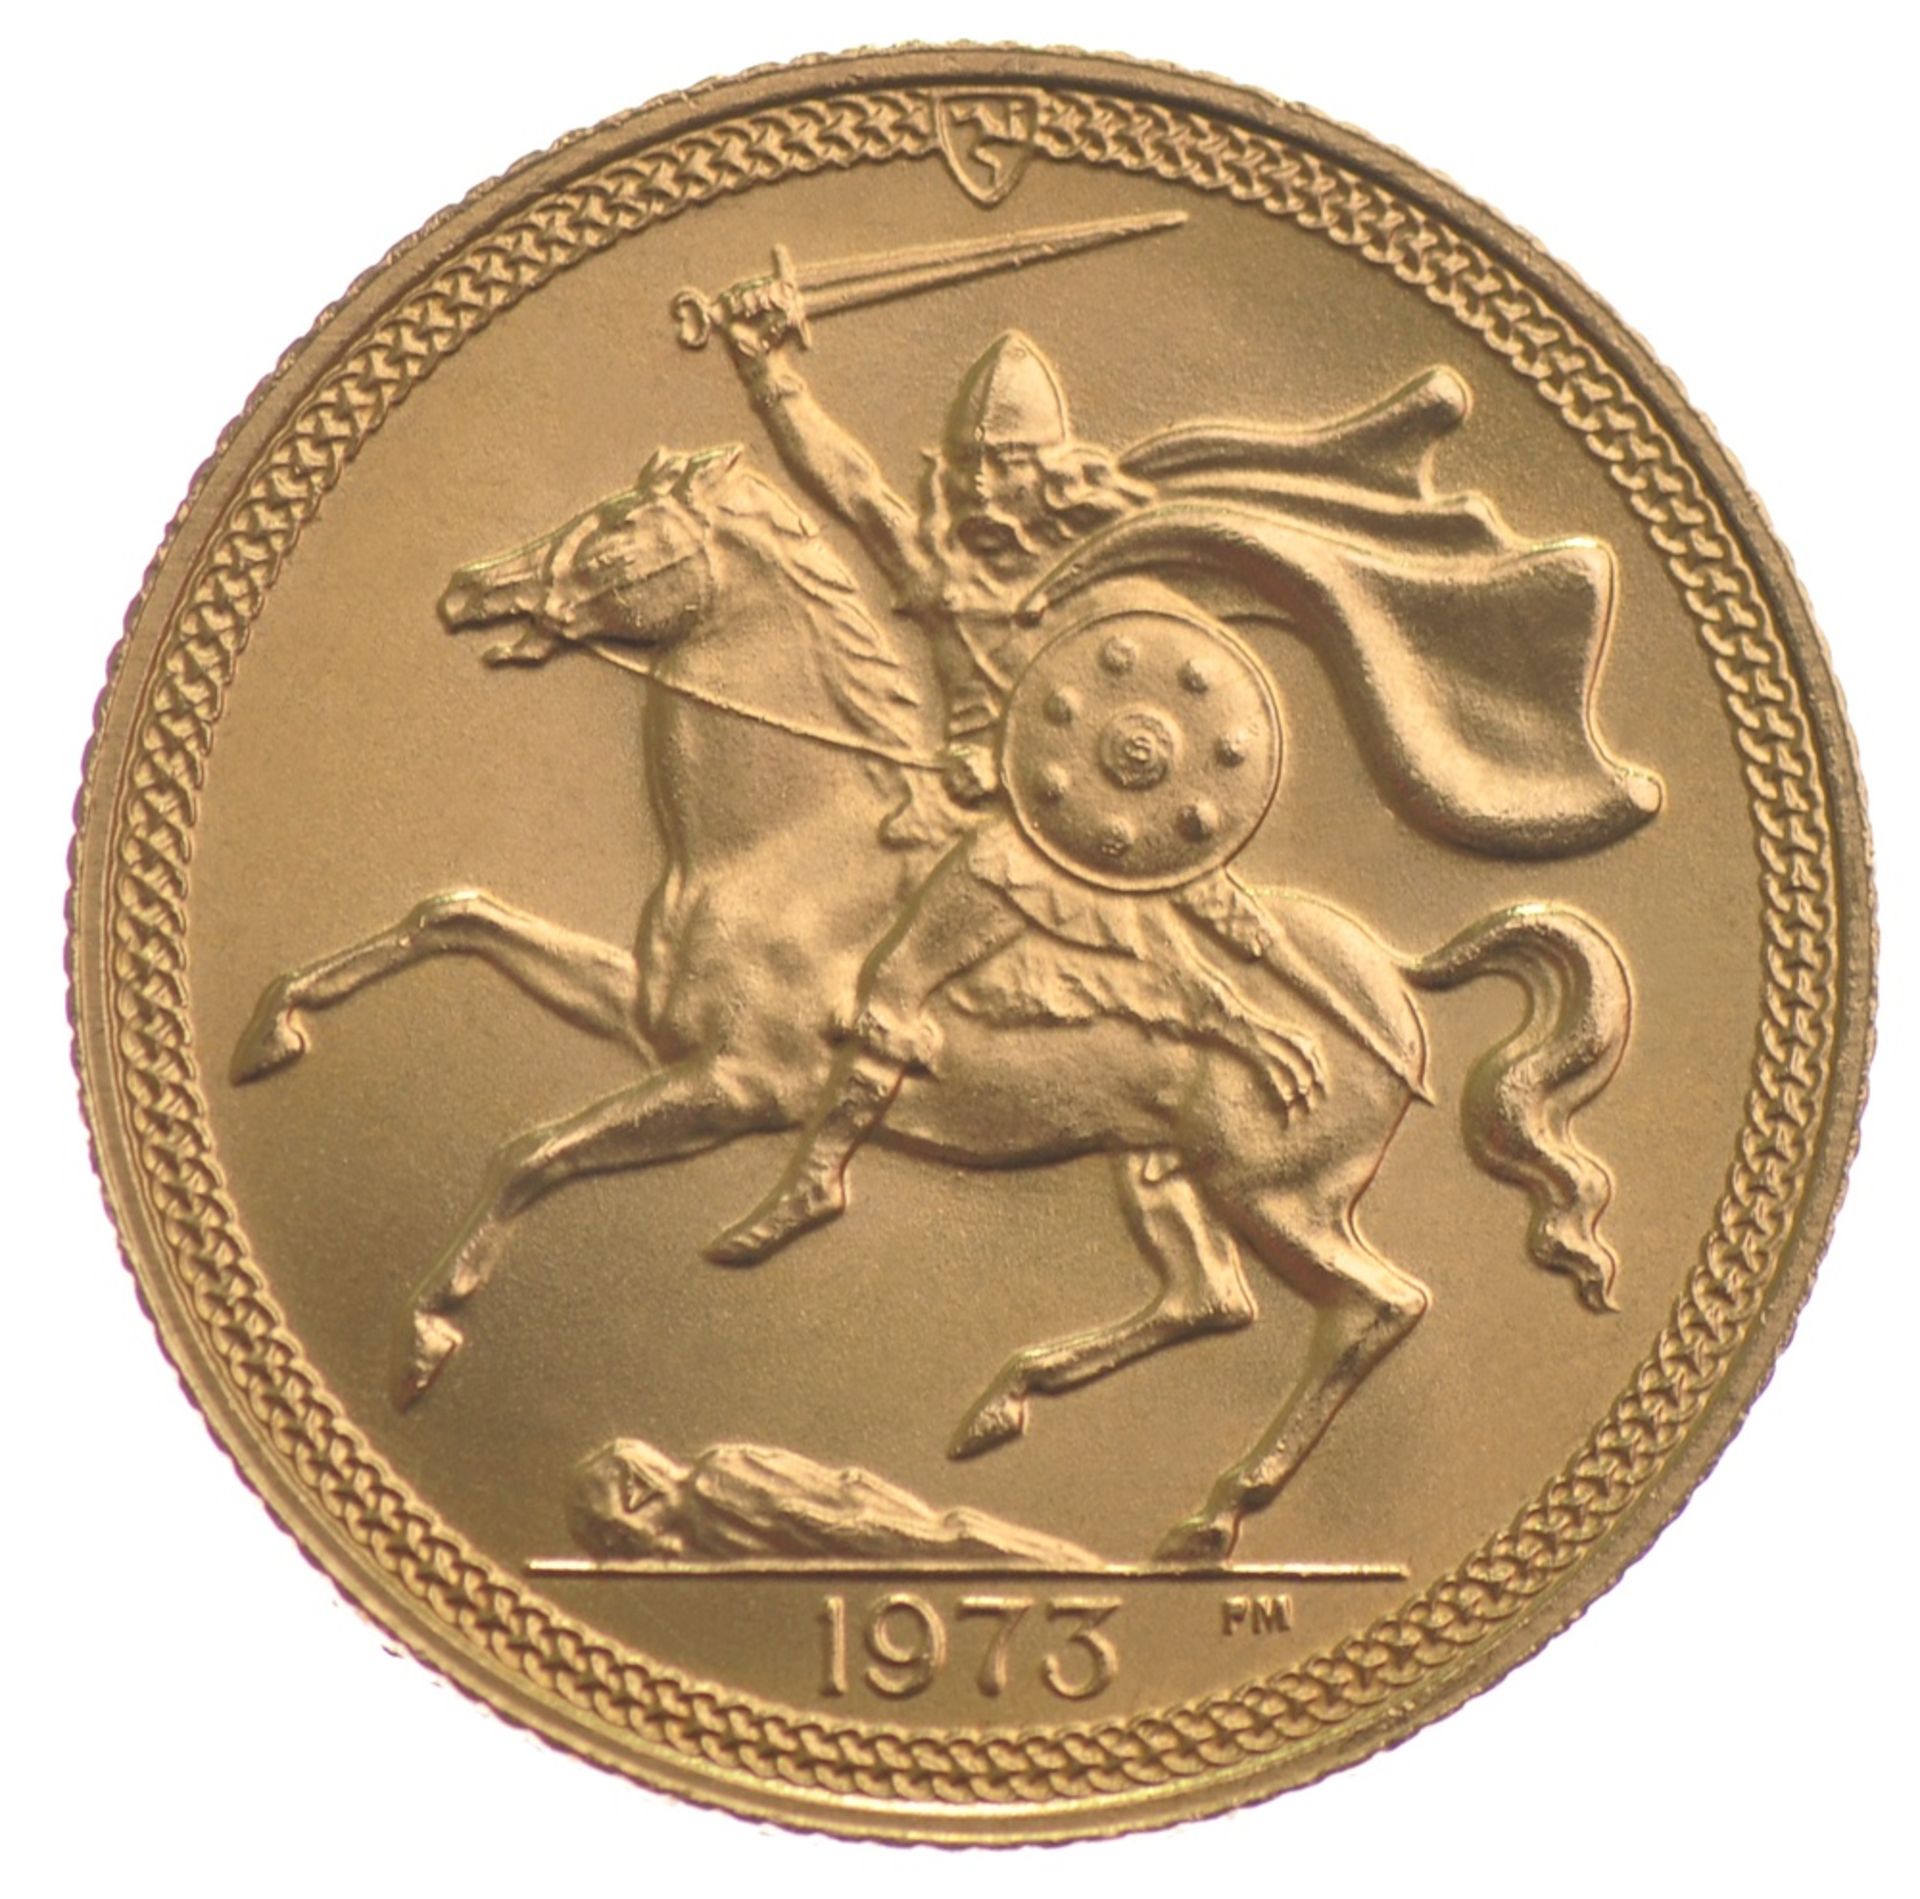 Isle of Man, Elizabeth II, gold Half-Sovereigns - Image 2 of 2